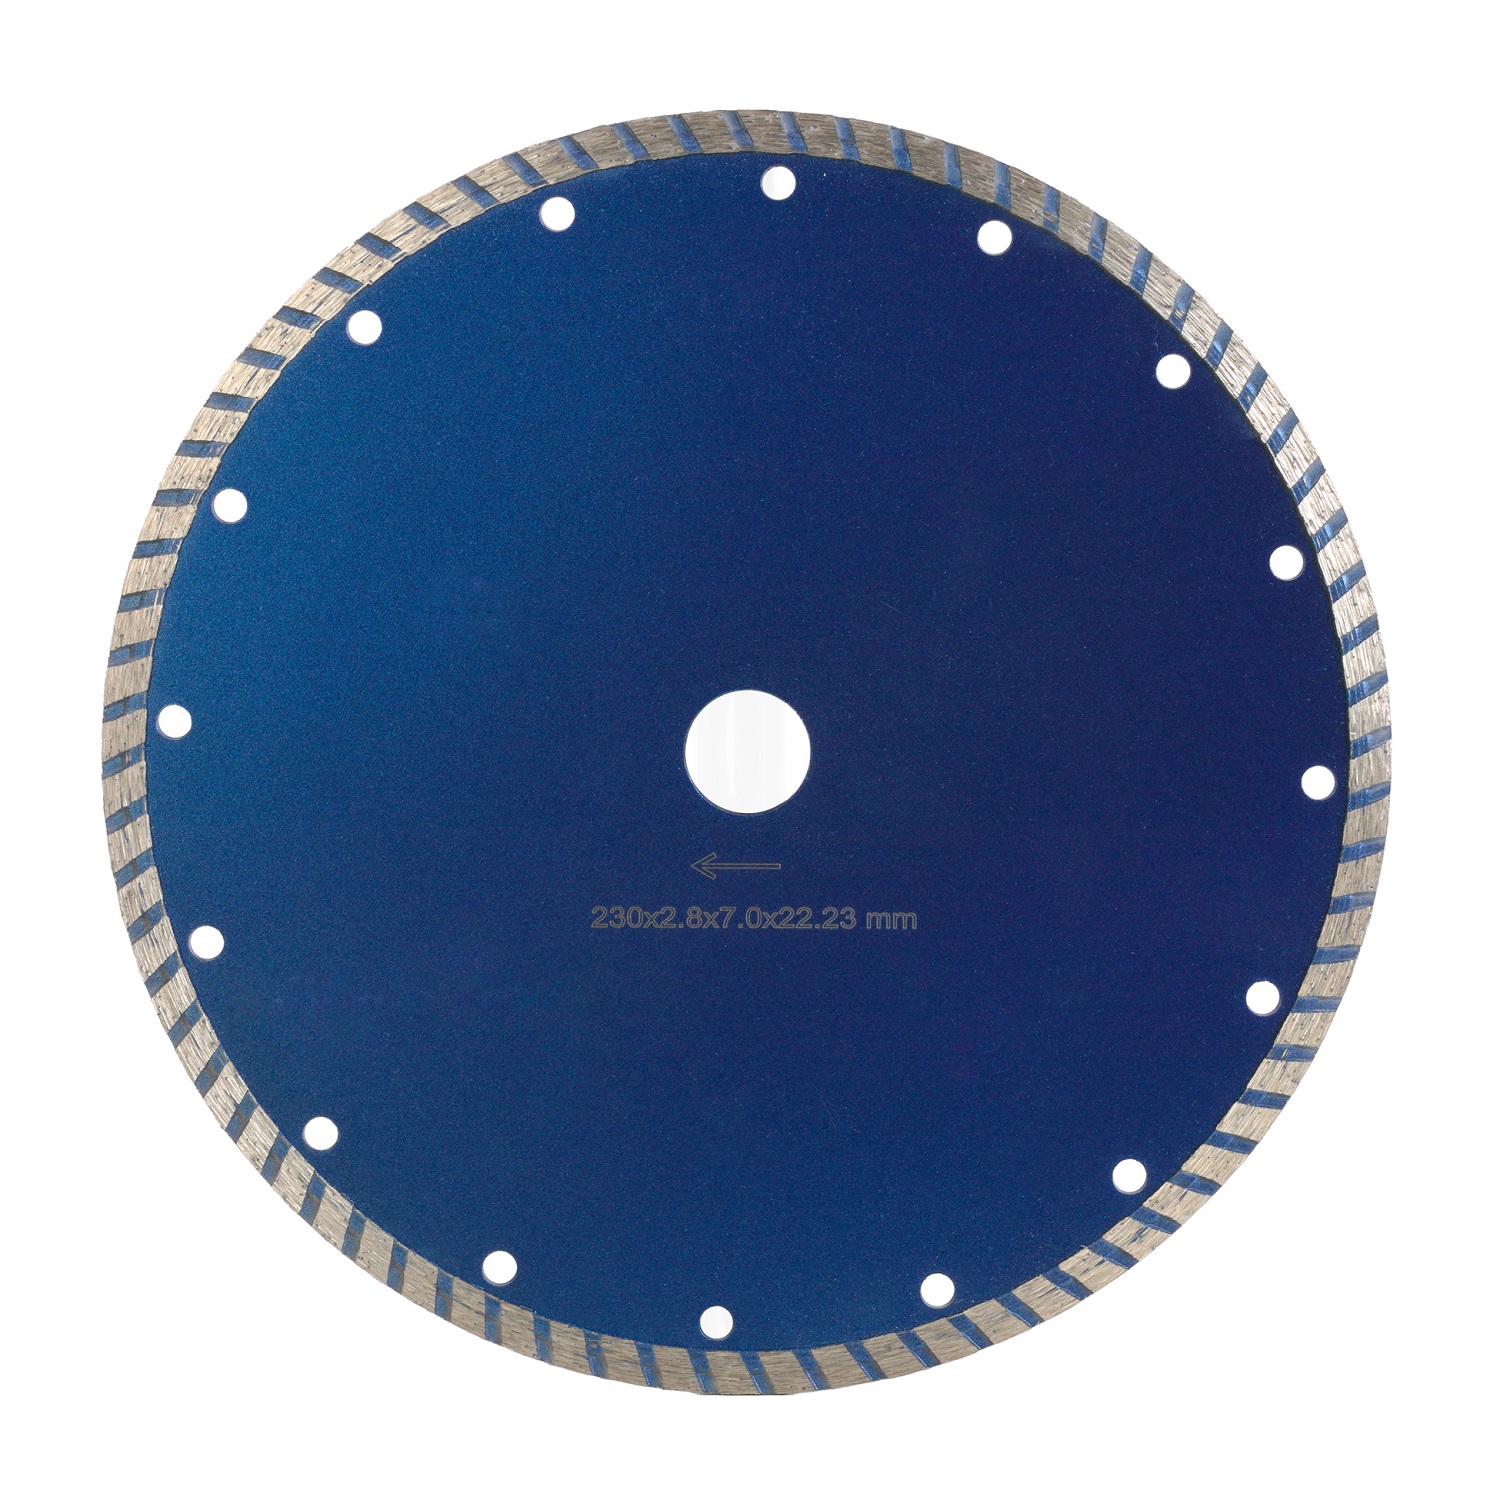 Диск турбо COBRA Standard д.230*22,2 (2,8*7)мм | универсал/dry DIAMASTER диск сегментный laser arix razor д 400 2 8 25 4 40 3 6 12 мм 24z железобетон wet dry diamaster